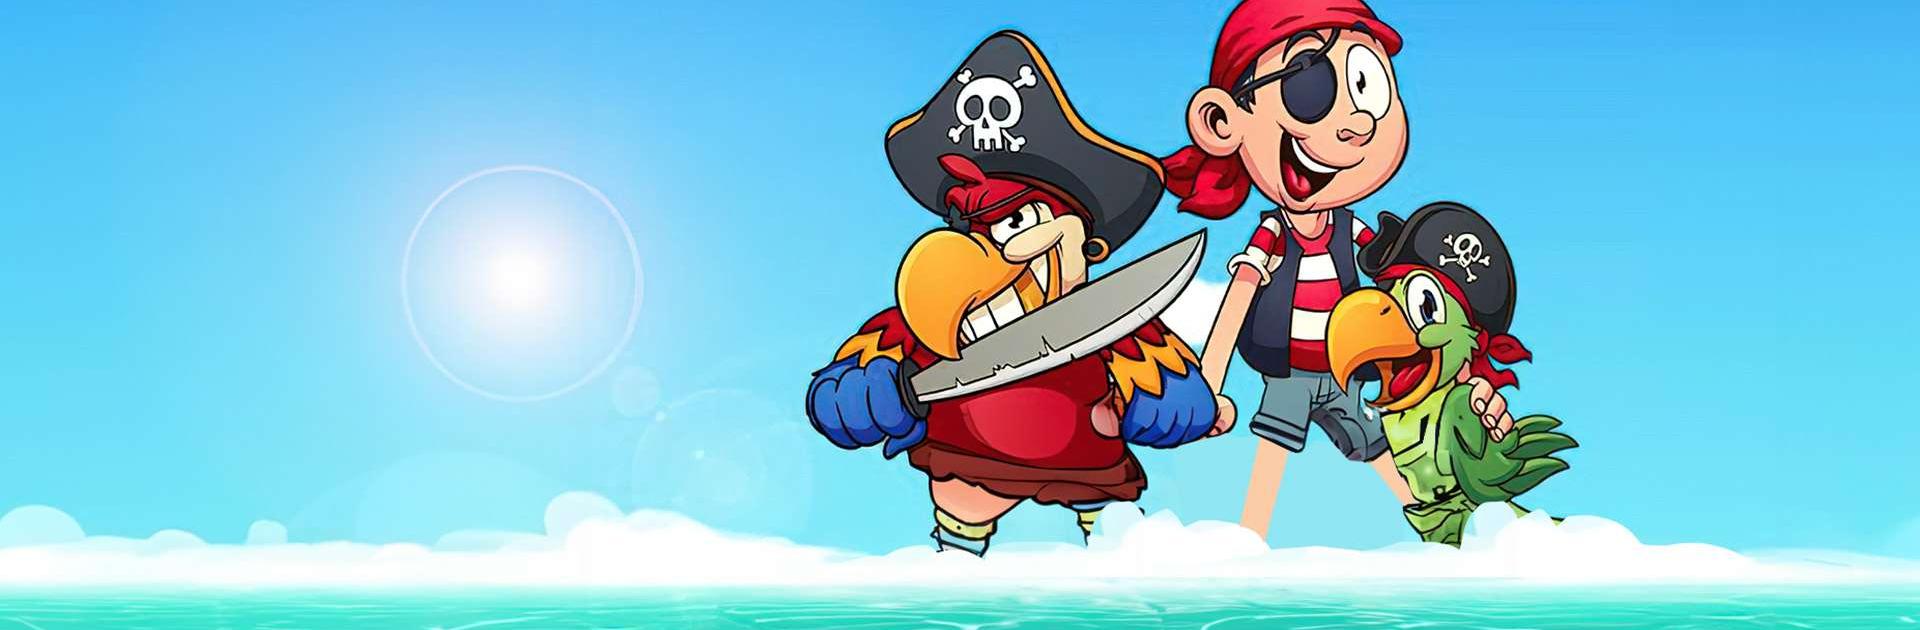 Play Pirate Bricks Breaker Online